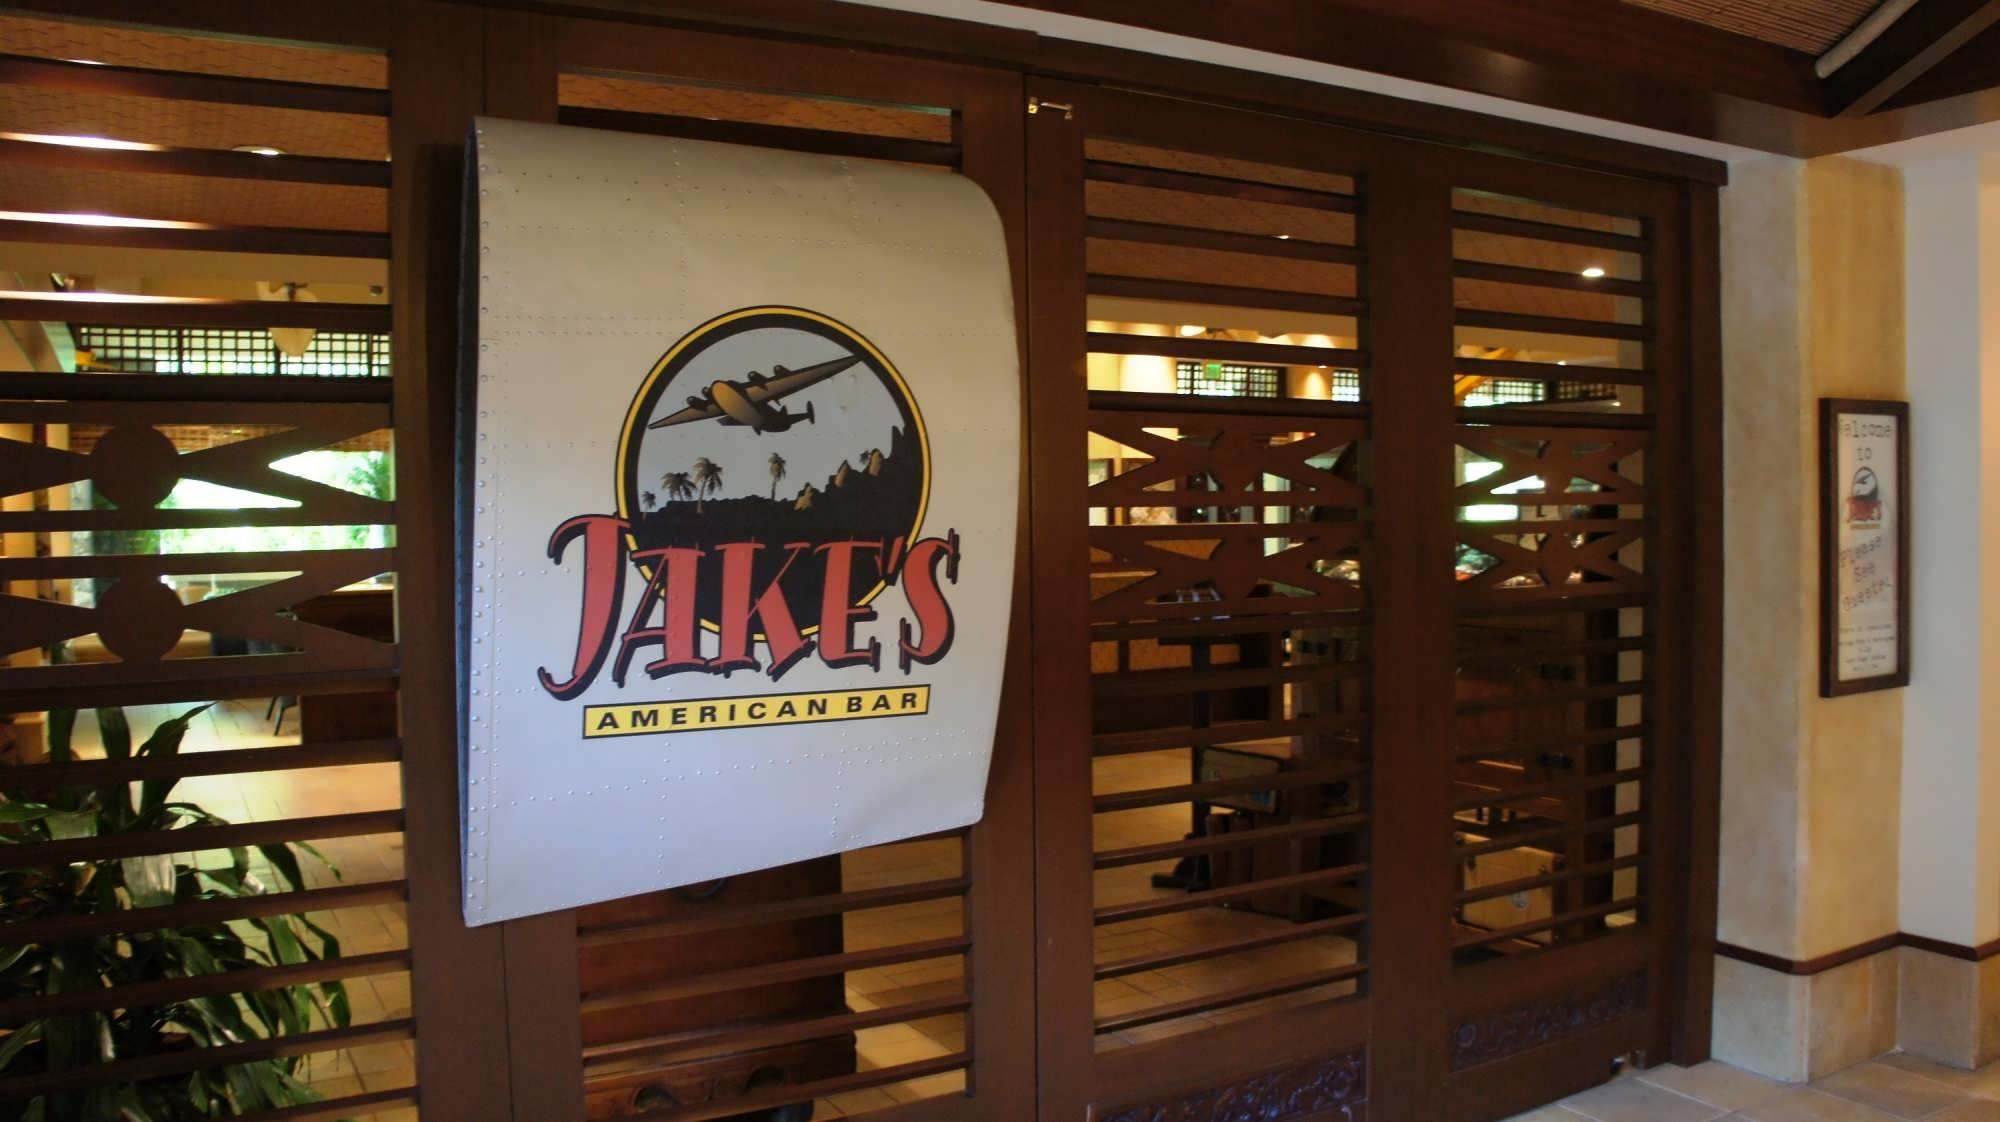 Jake’s American Bar (full-service) at Royal Pacific Resort